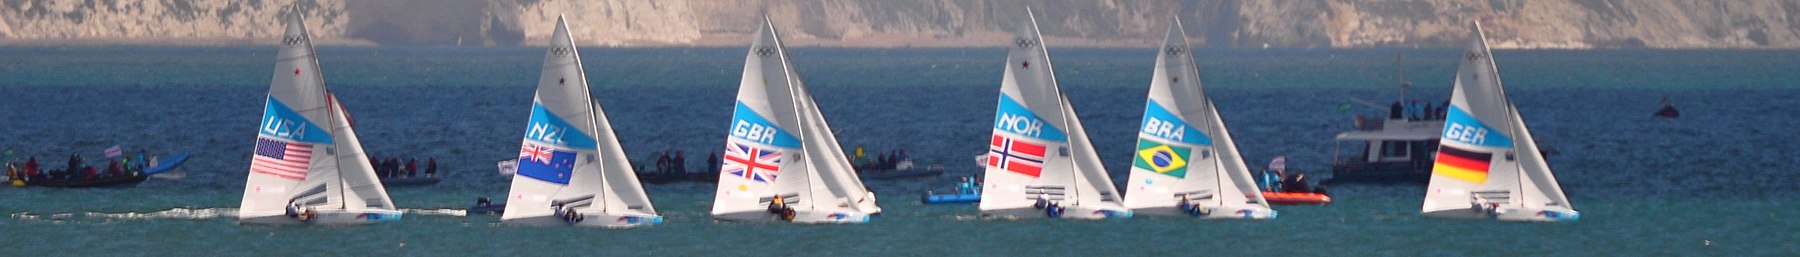 2012 Olympic Sailing, Weymouth, Dorset (cropped).jpg